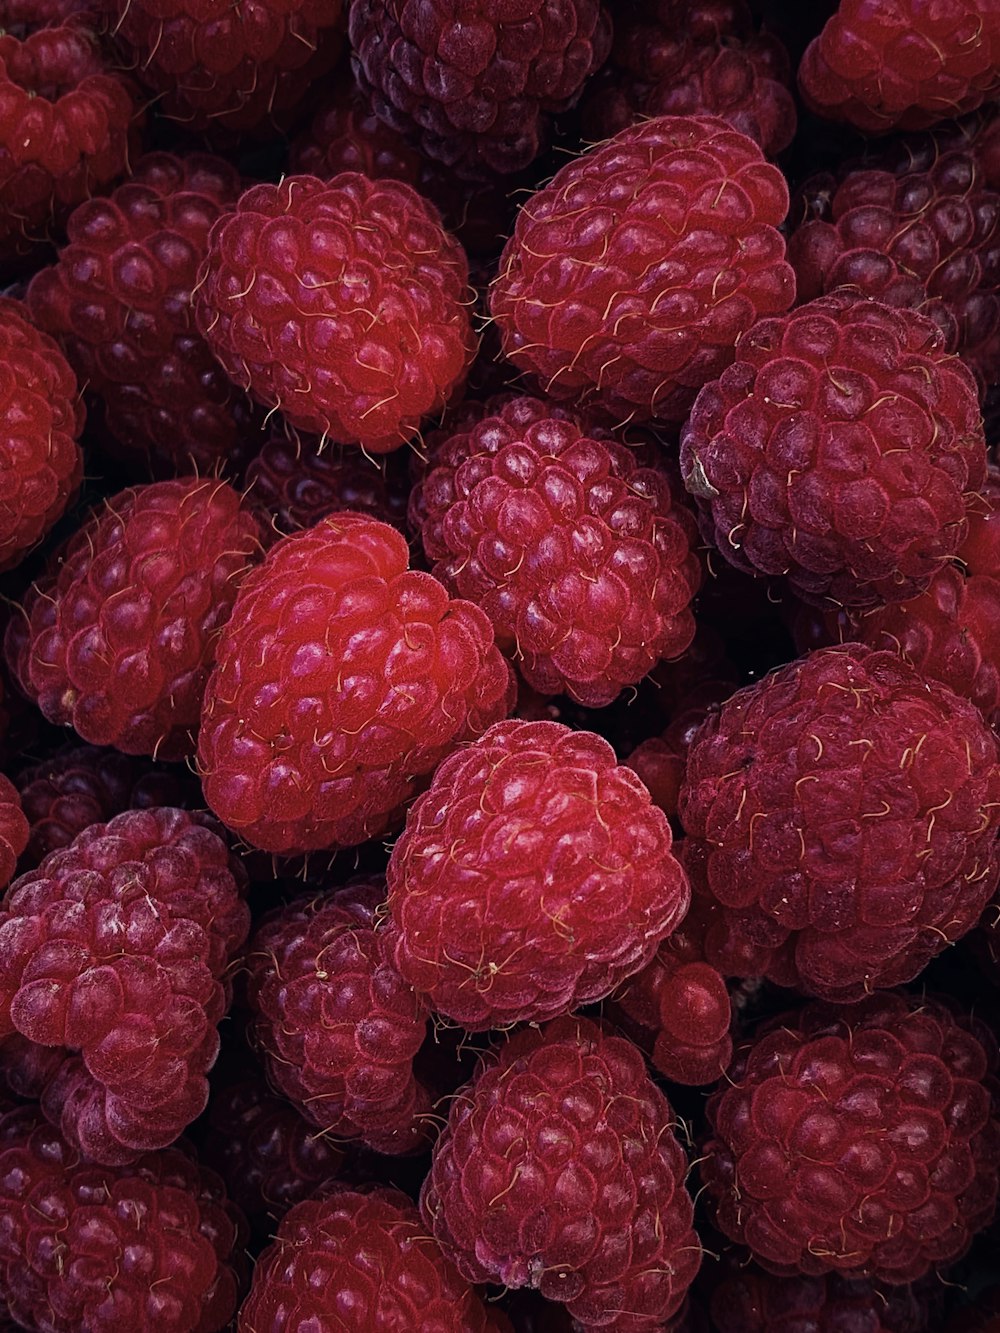 a group of raspberries